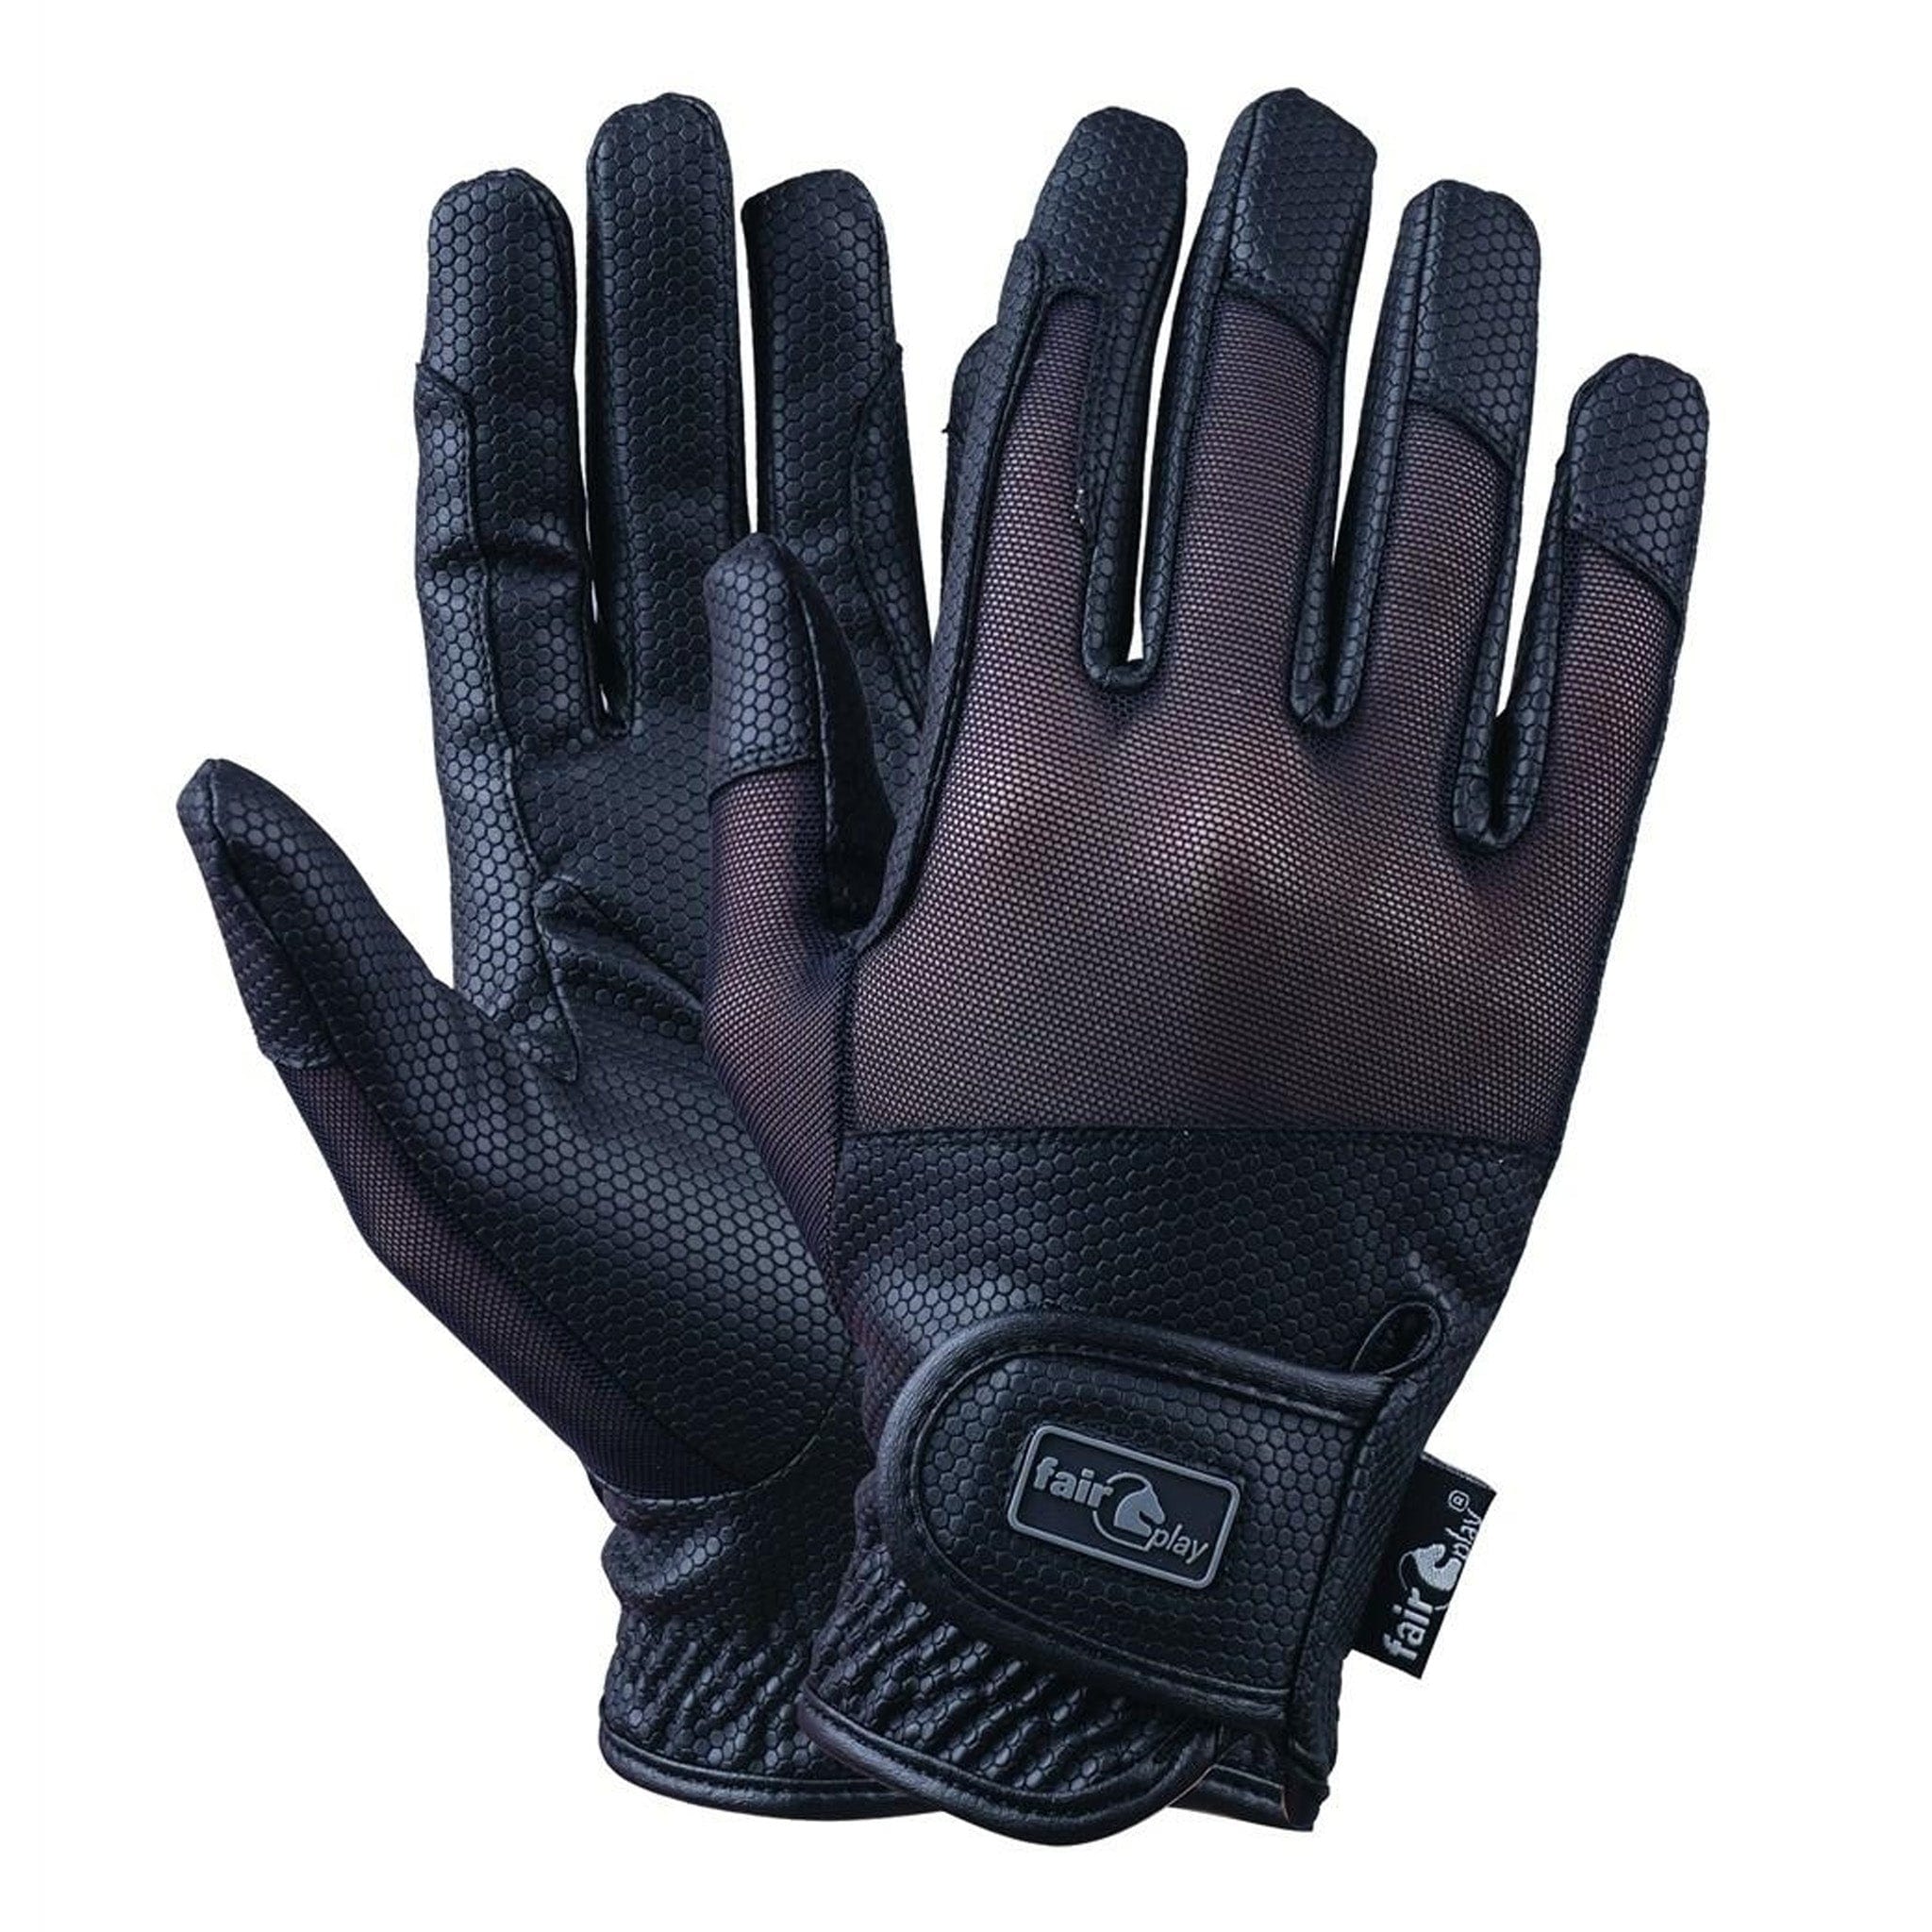 Fair Play Grippi Summer Riding Gloves 0606000 Black Pair Back Hand and Palm